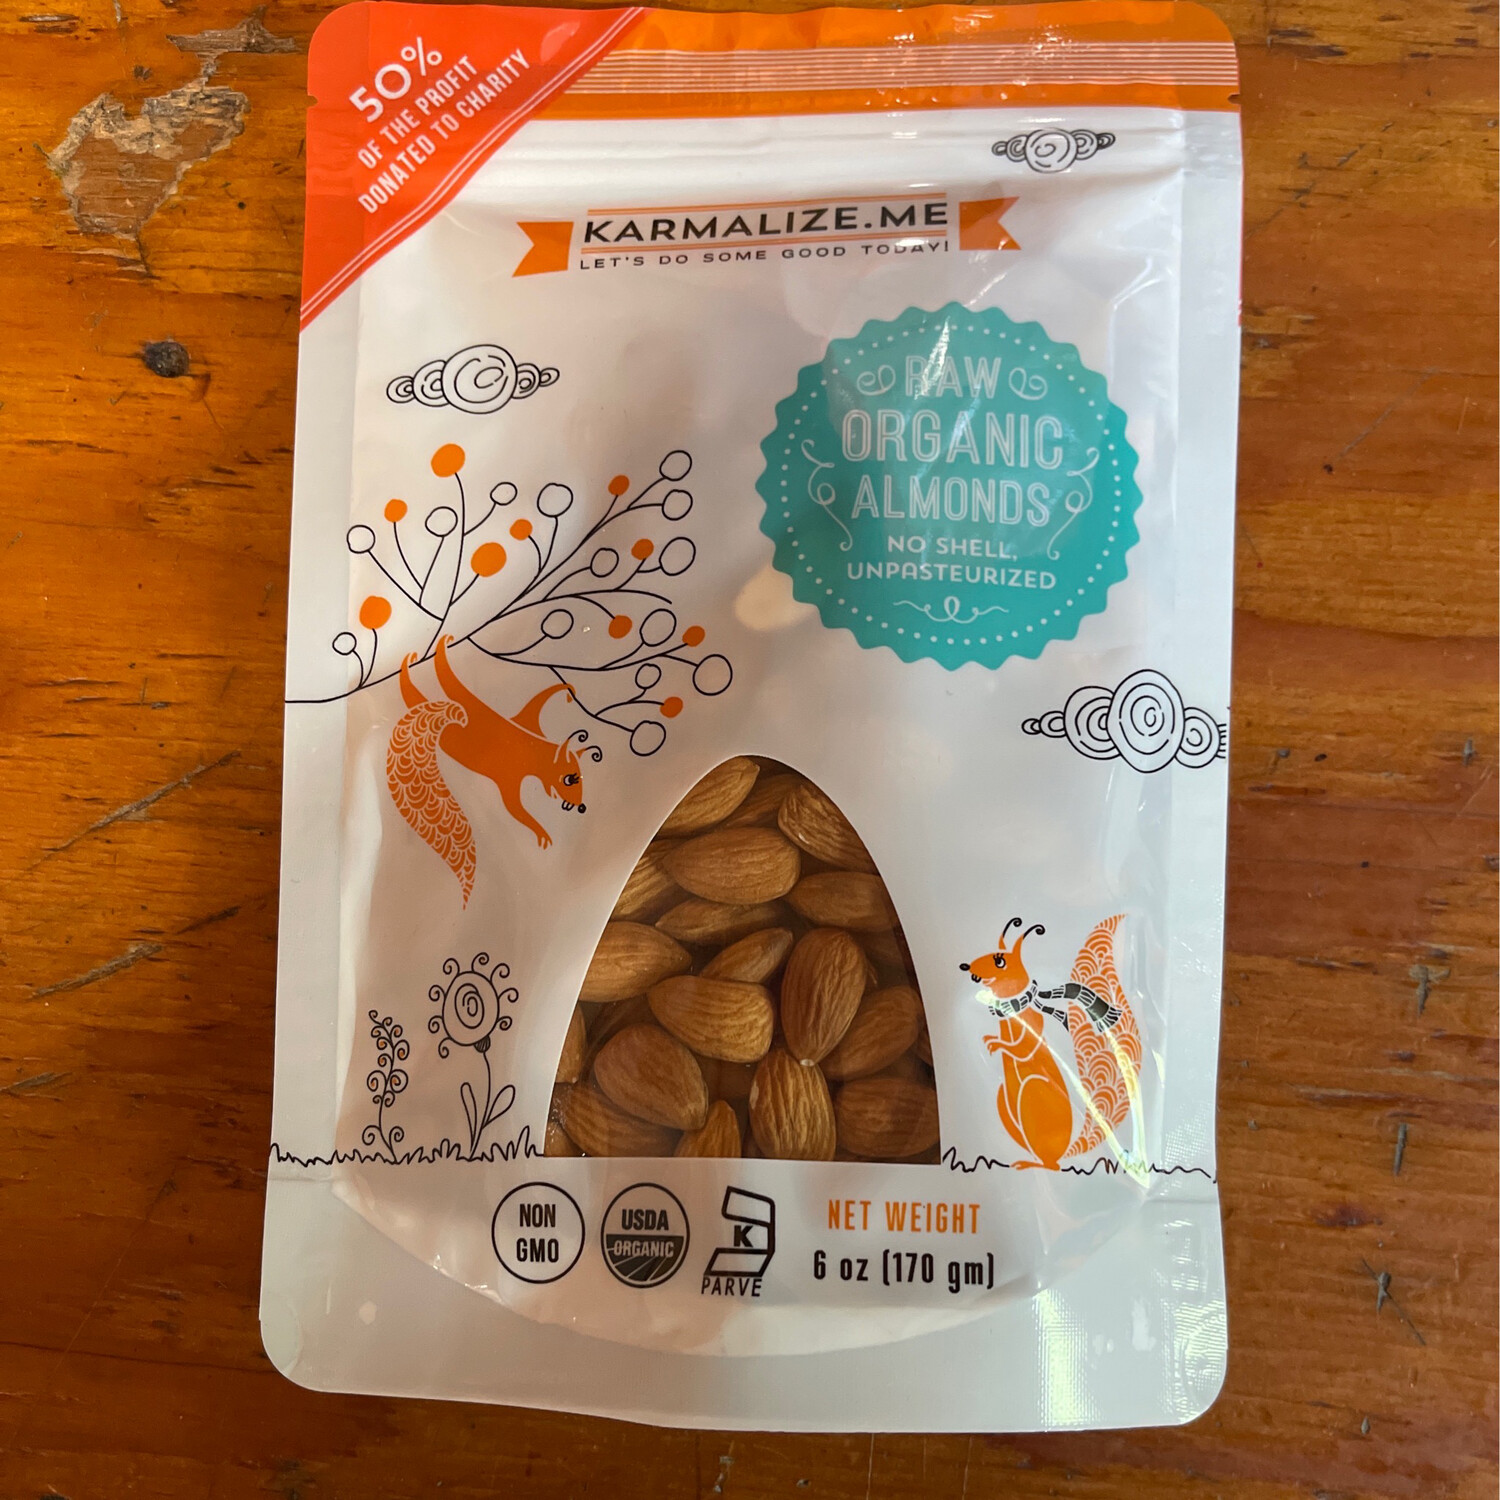 Raw Organic Almonds (No Shell, Pasteurized) (6oz)